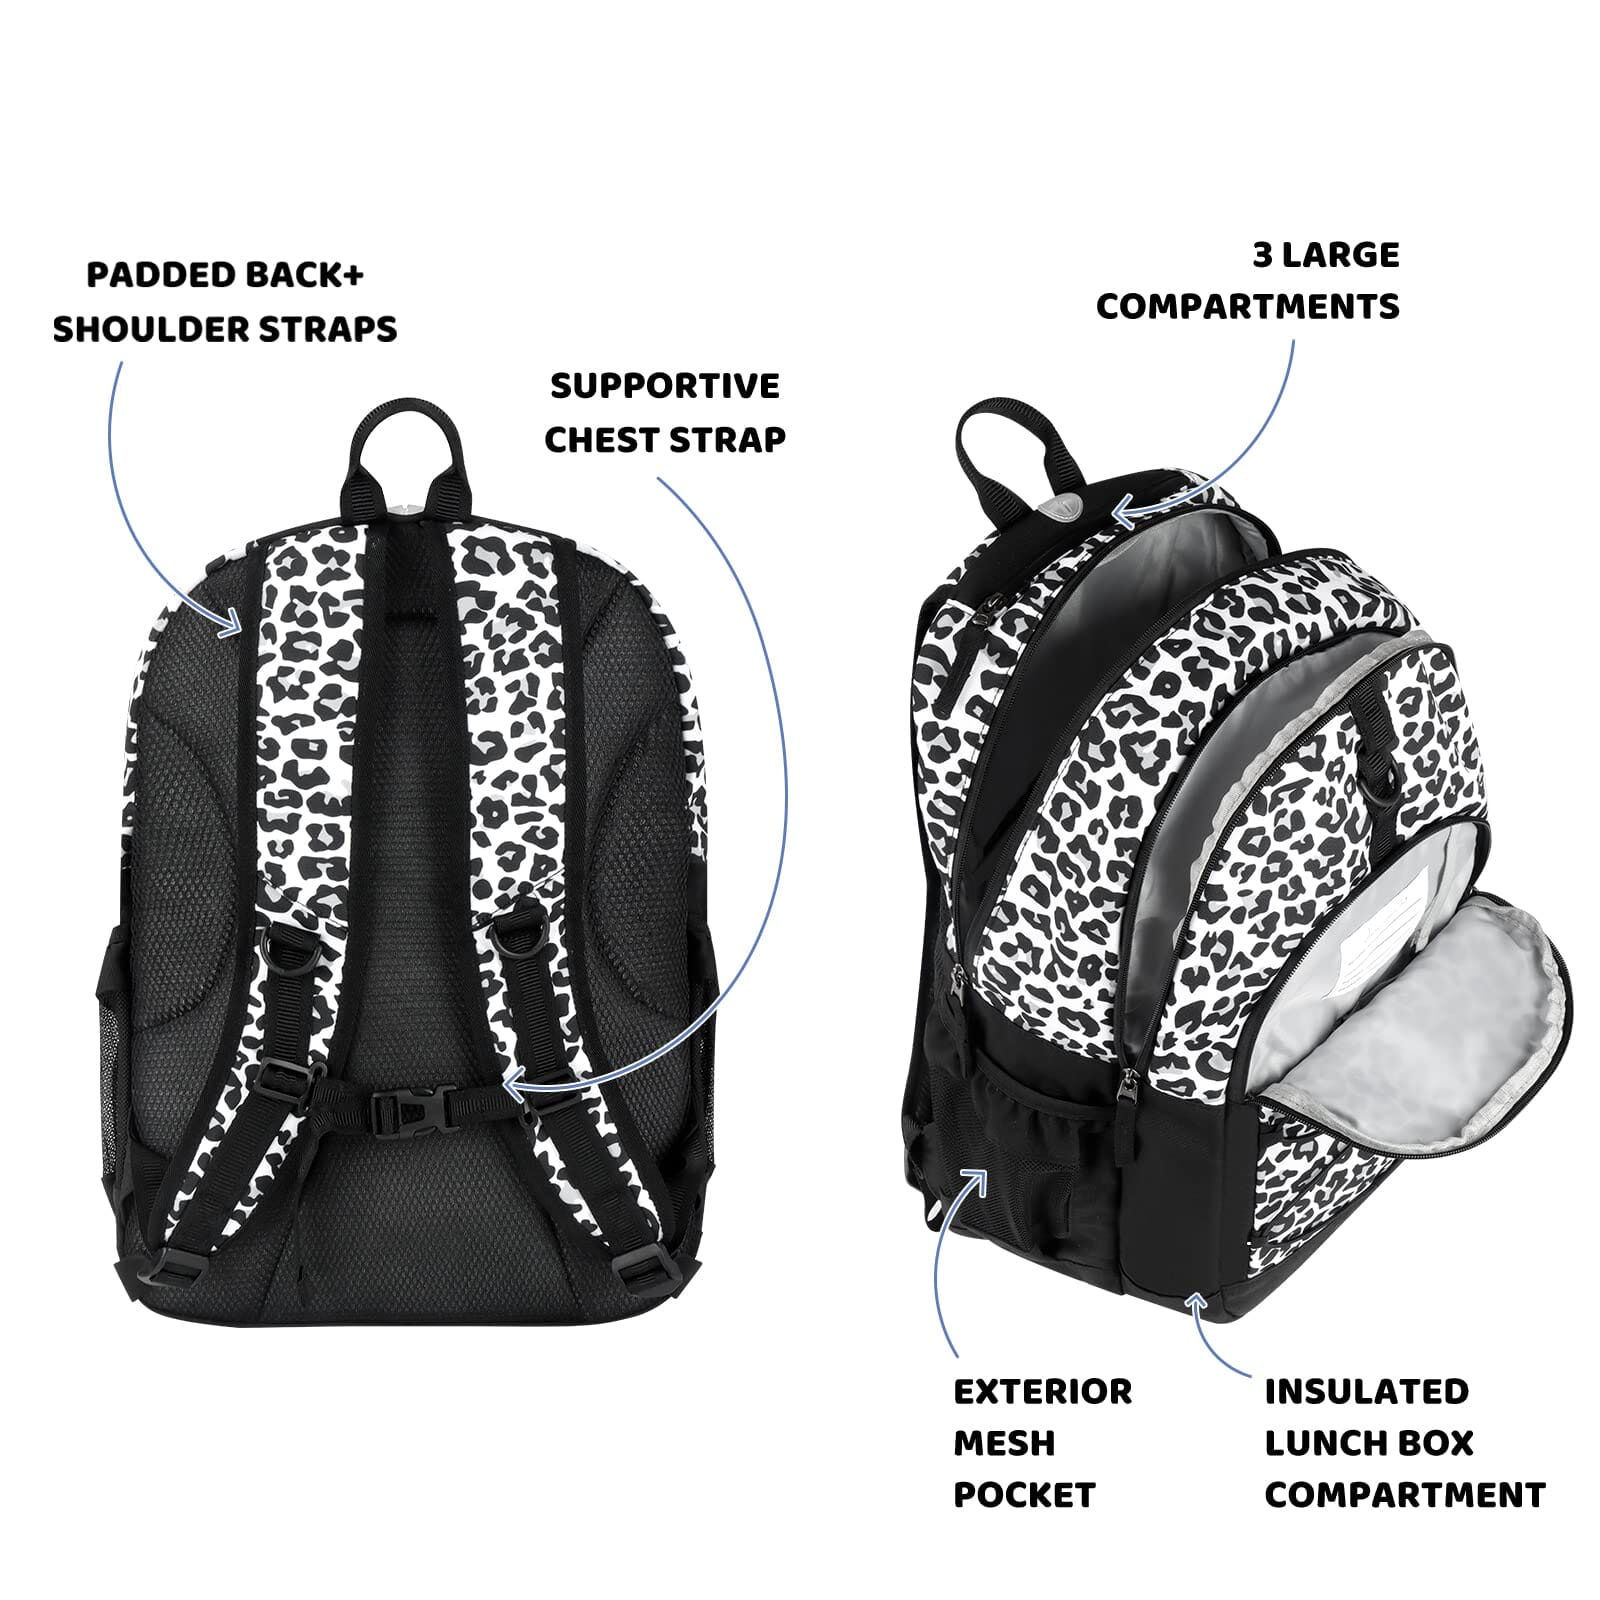 Choco Mocha Snow Leopard Backpack for Teen Girls, Travel School Backpack for Girls Middle School Large Bookbag 18 Inch, Black chocomochakids 